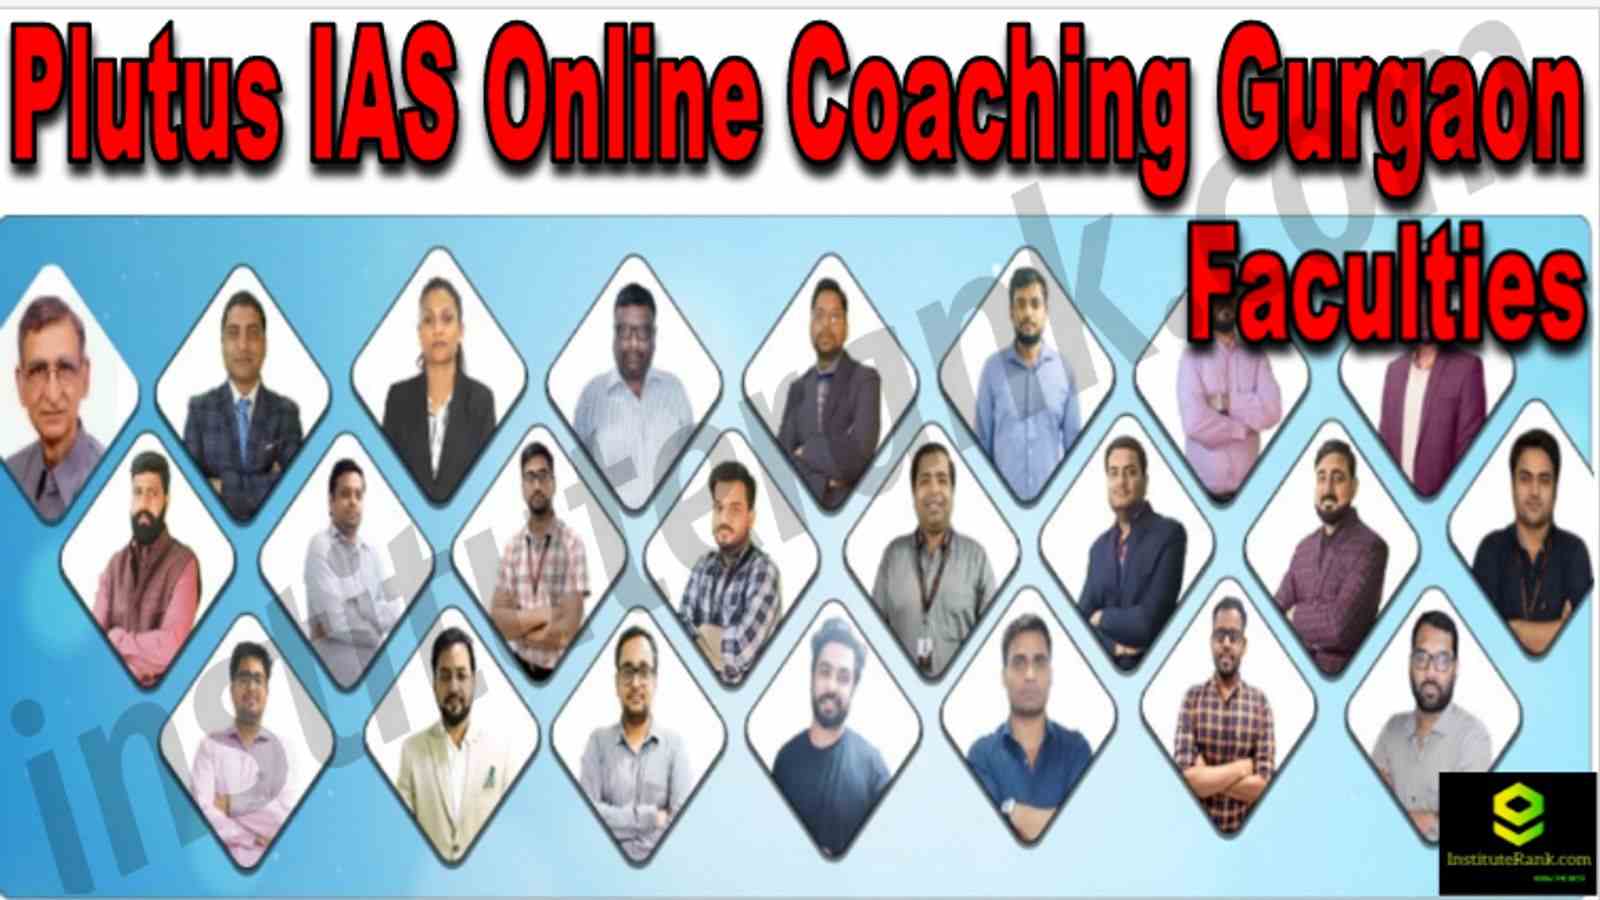 Plutus IAS Online Coaching Gurgaon Reviews Faculties